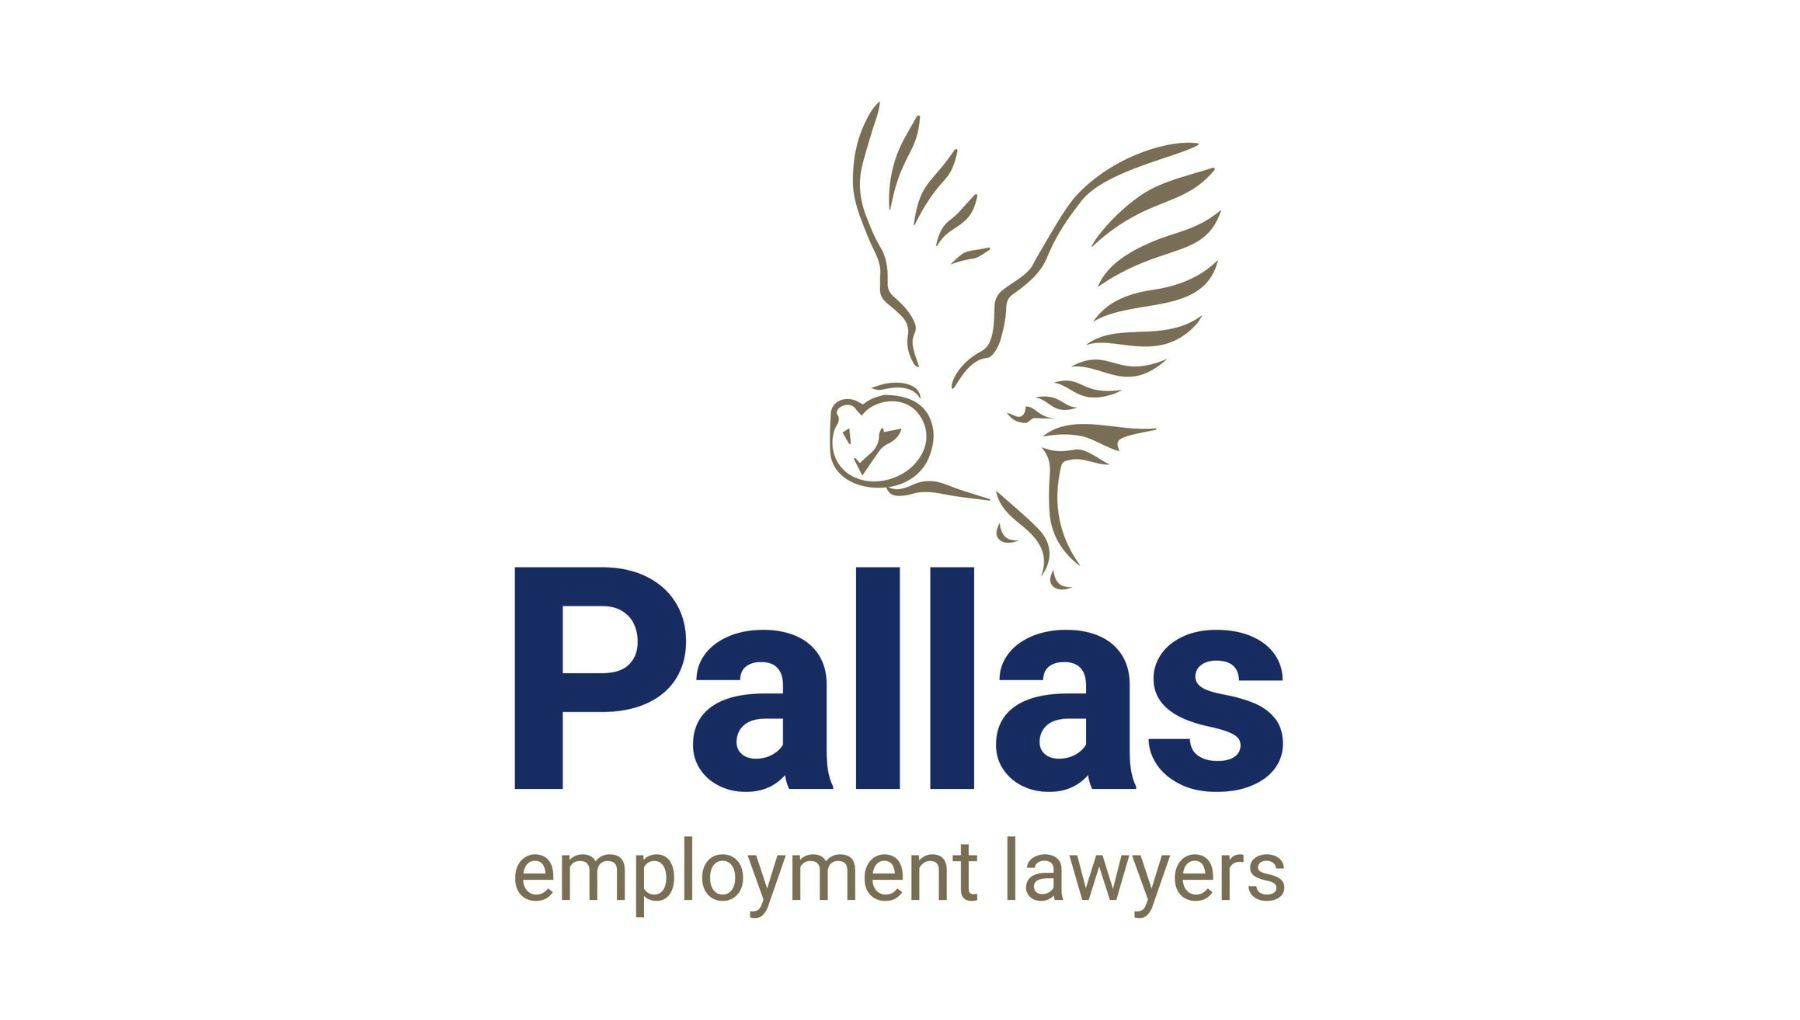 Pallas Attorneys-at-Law